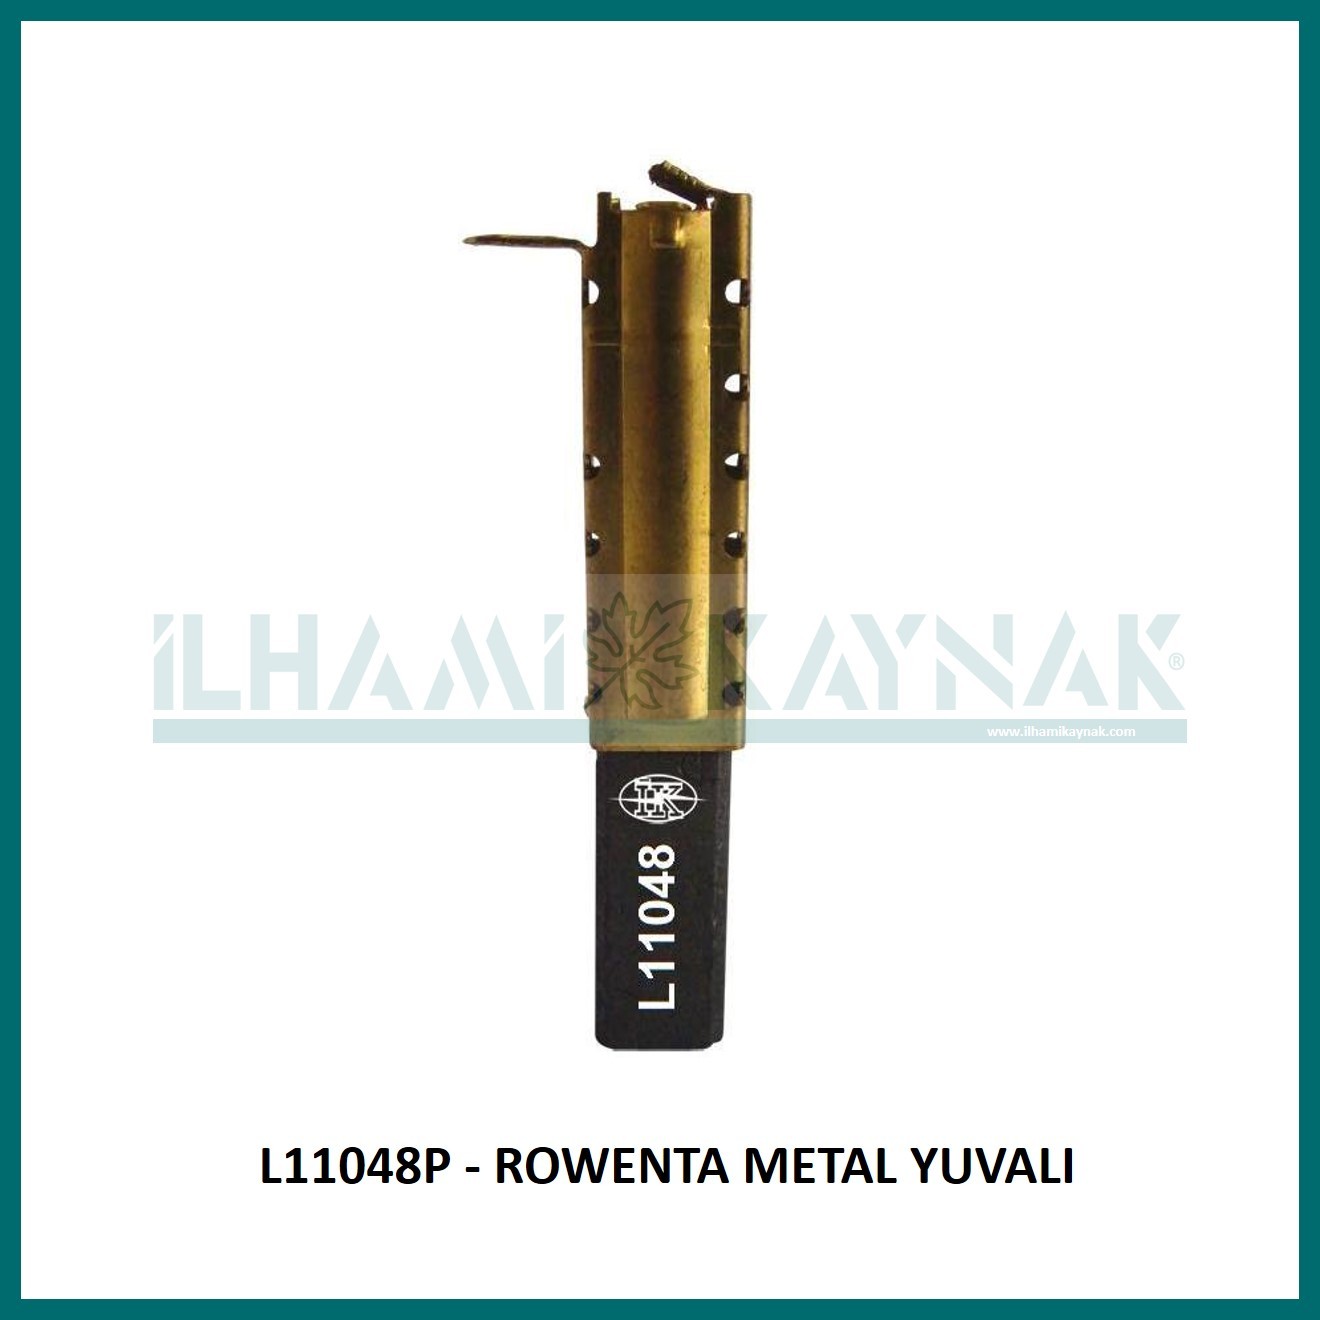 L11048P - ROWENTA METAL YUVALI - 6.3*11*32 mm - Minimum Satın Alım: 10 Adet